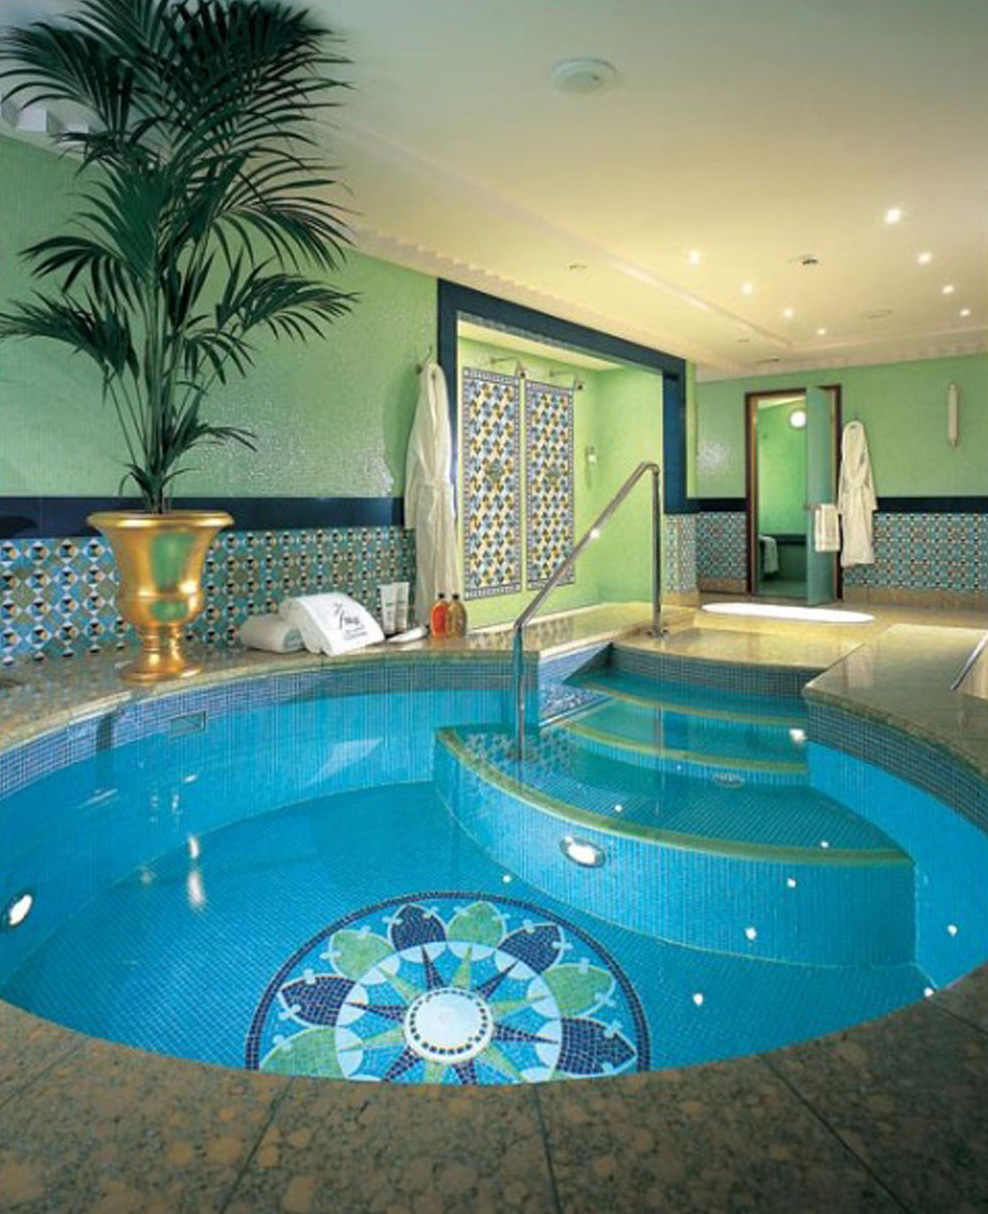 luxury swimming pool hotel » Viahouse.